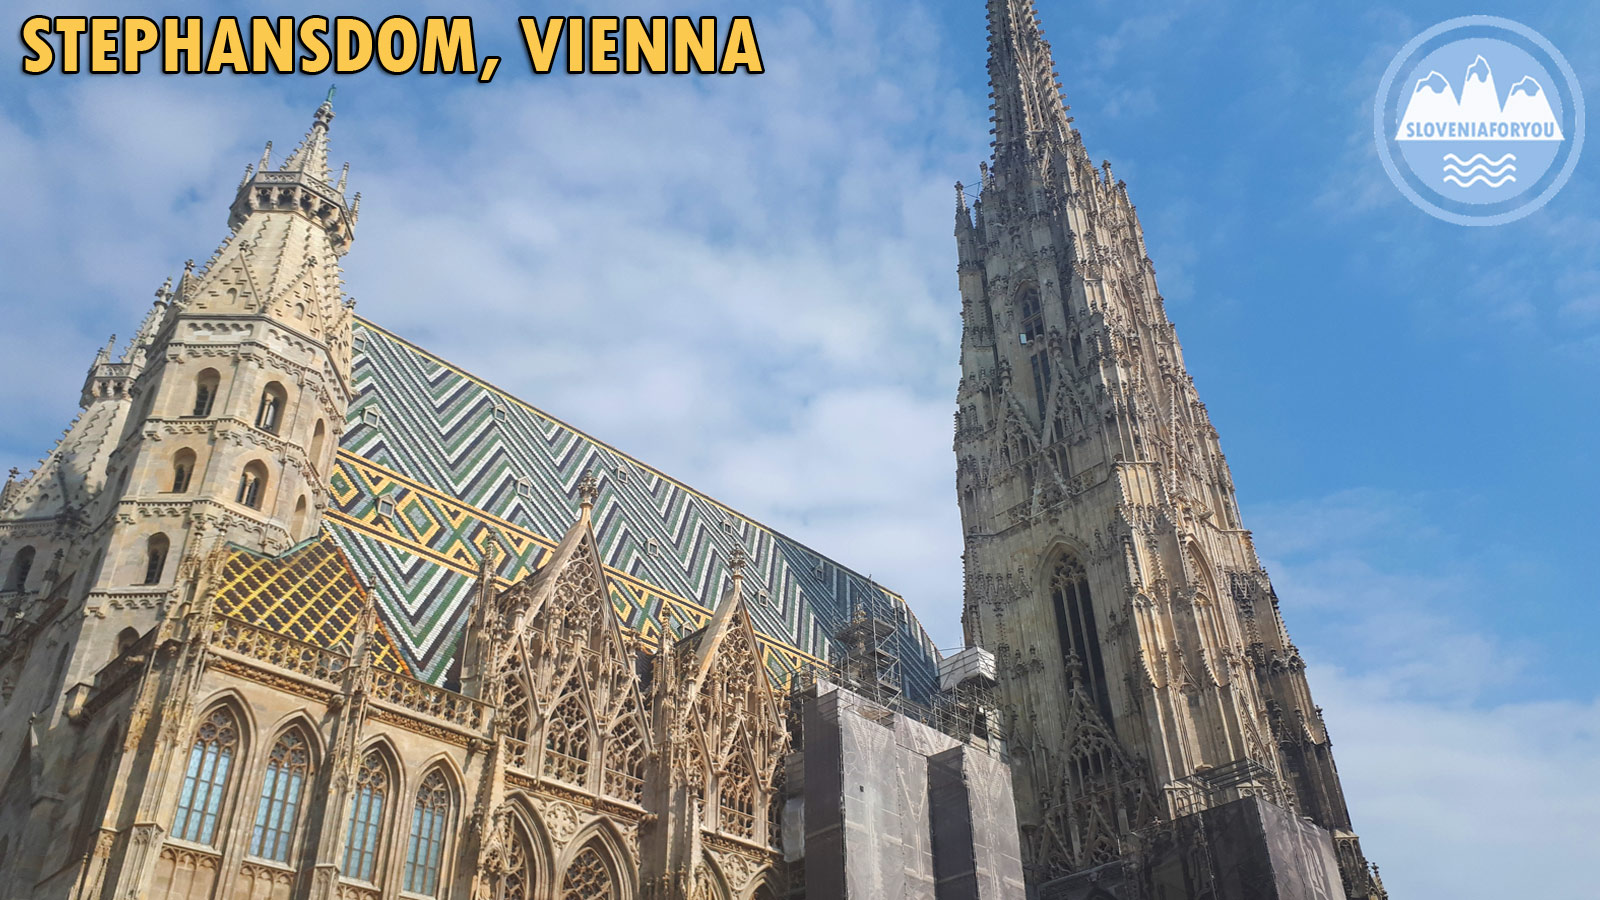 Stunning Stephansdom, Vienna, Sloveniaforyou